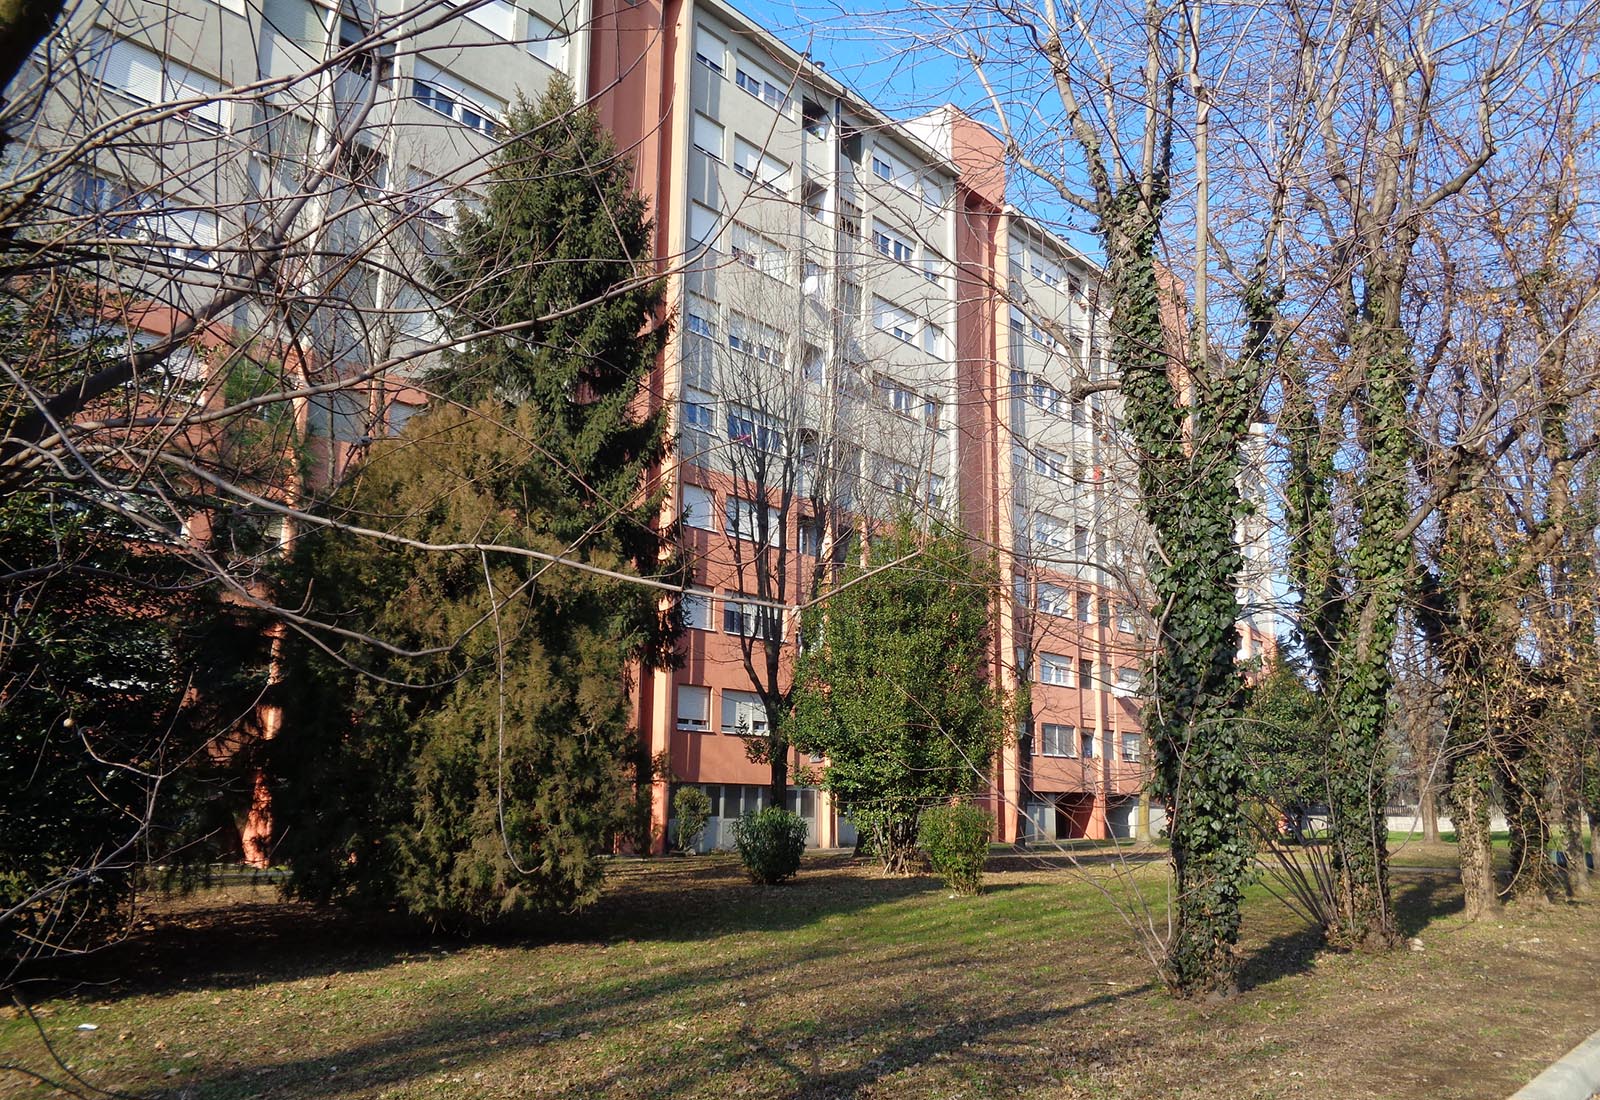 Residential ensemble Aler property in Cernusco sul Naviglio - View